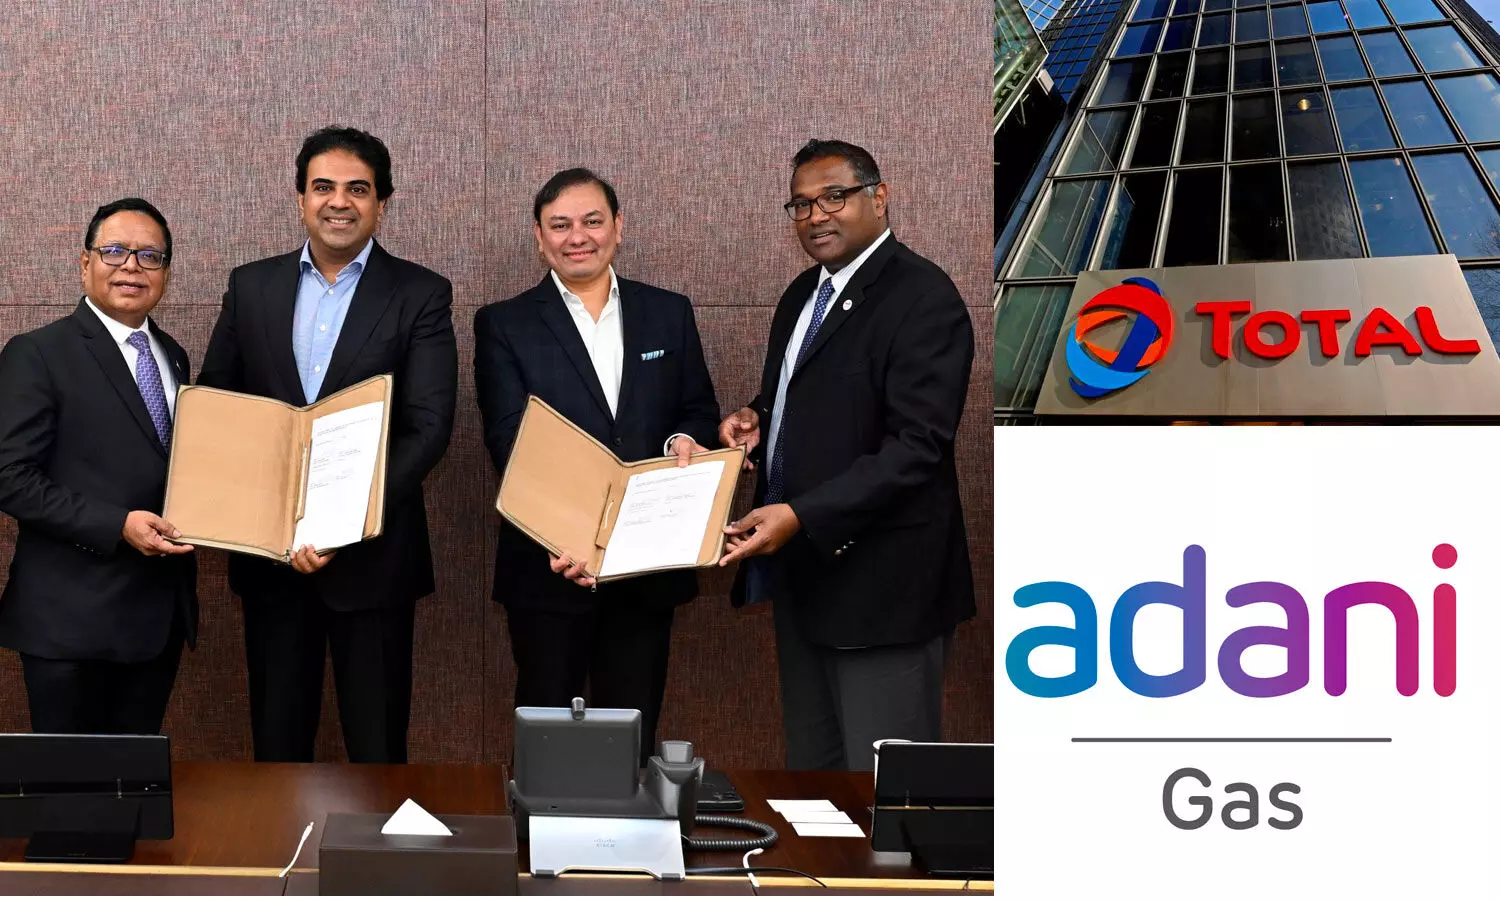 Adani Total Gas INOX India partnership: Adani Total Gas and INOX India joint venture